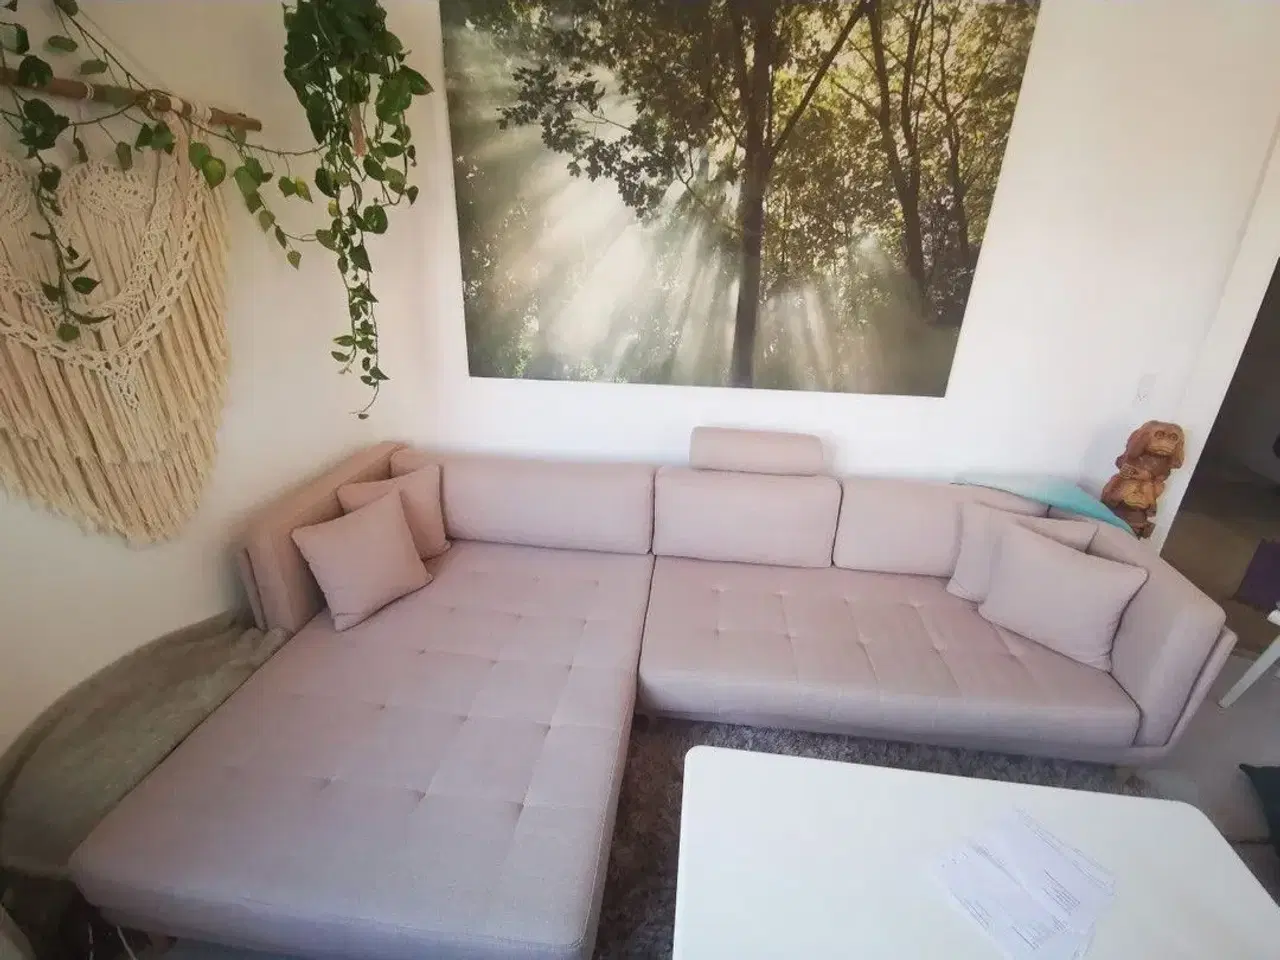 Billede 1 - Chaiselong sofa perfekt til de små kbh lejl 